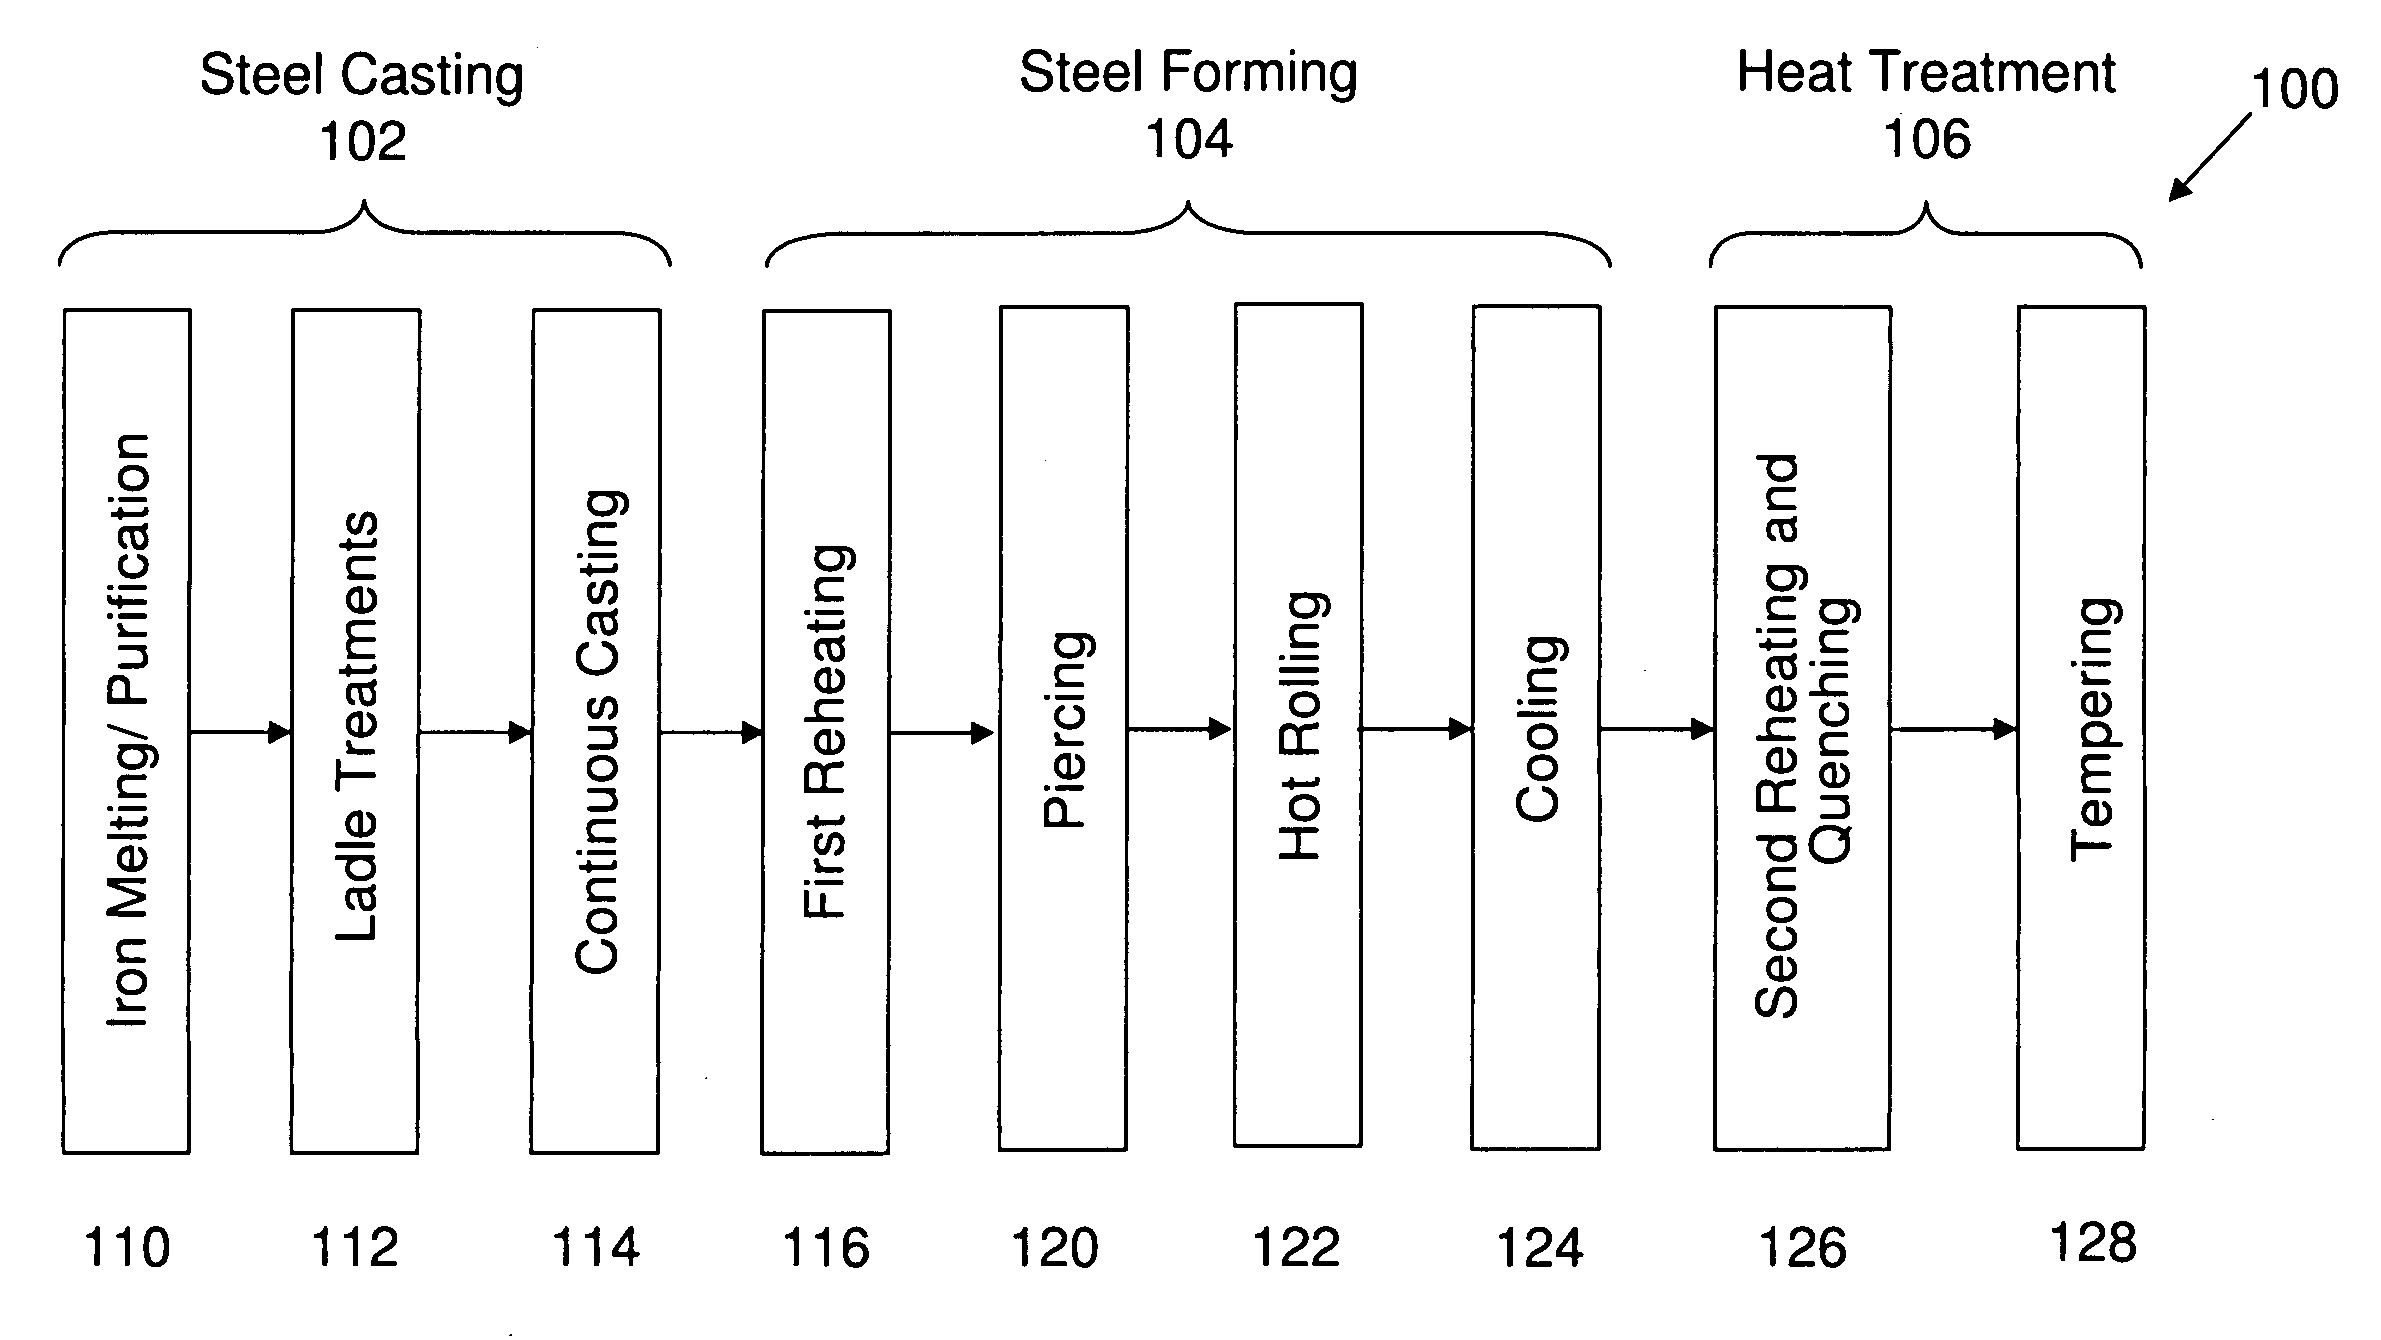 Bainitic steels with boron